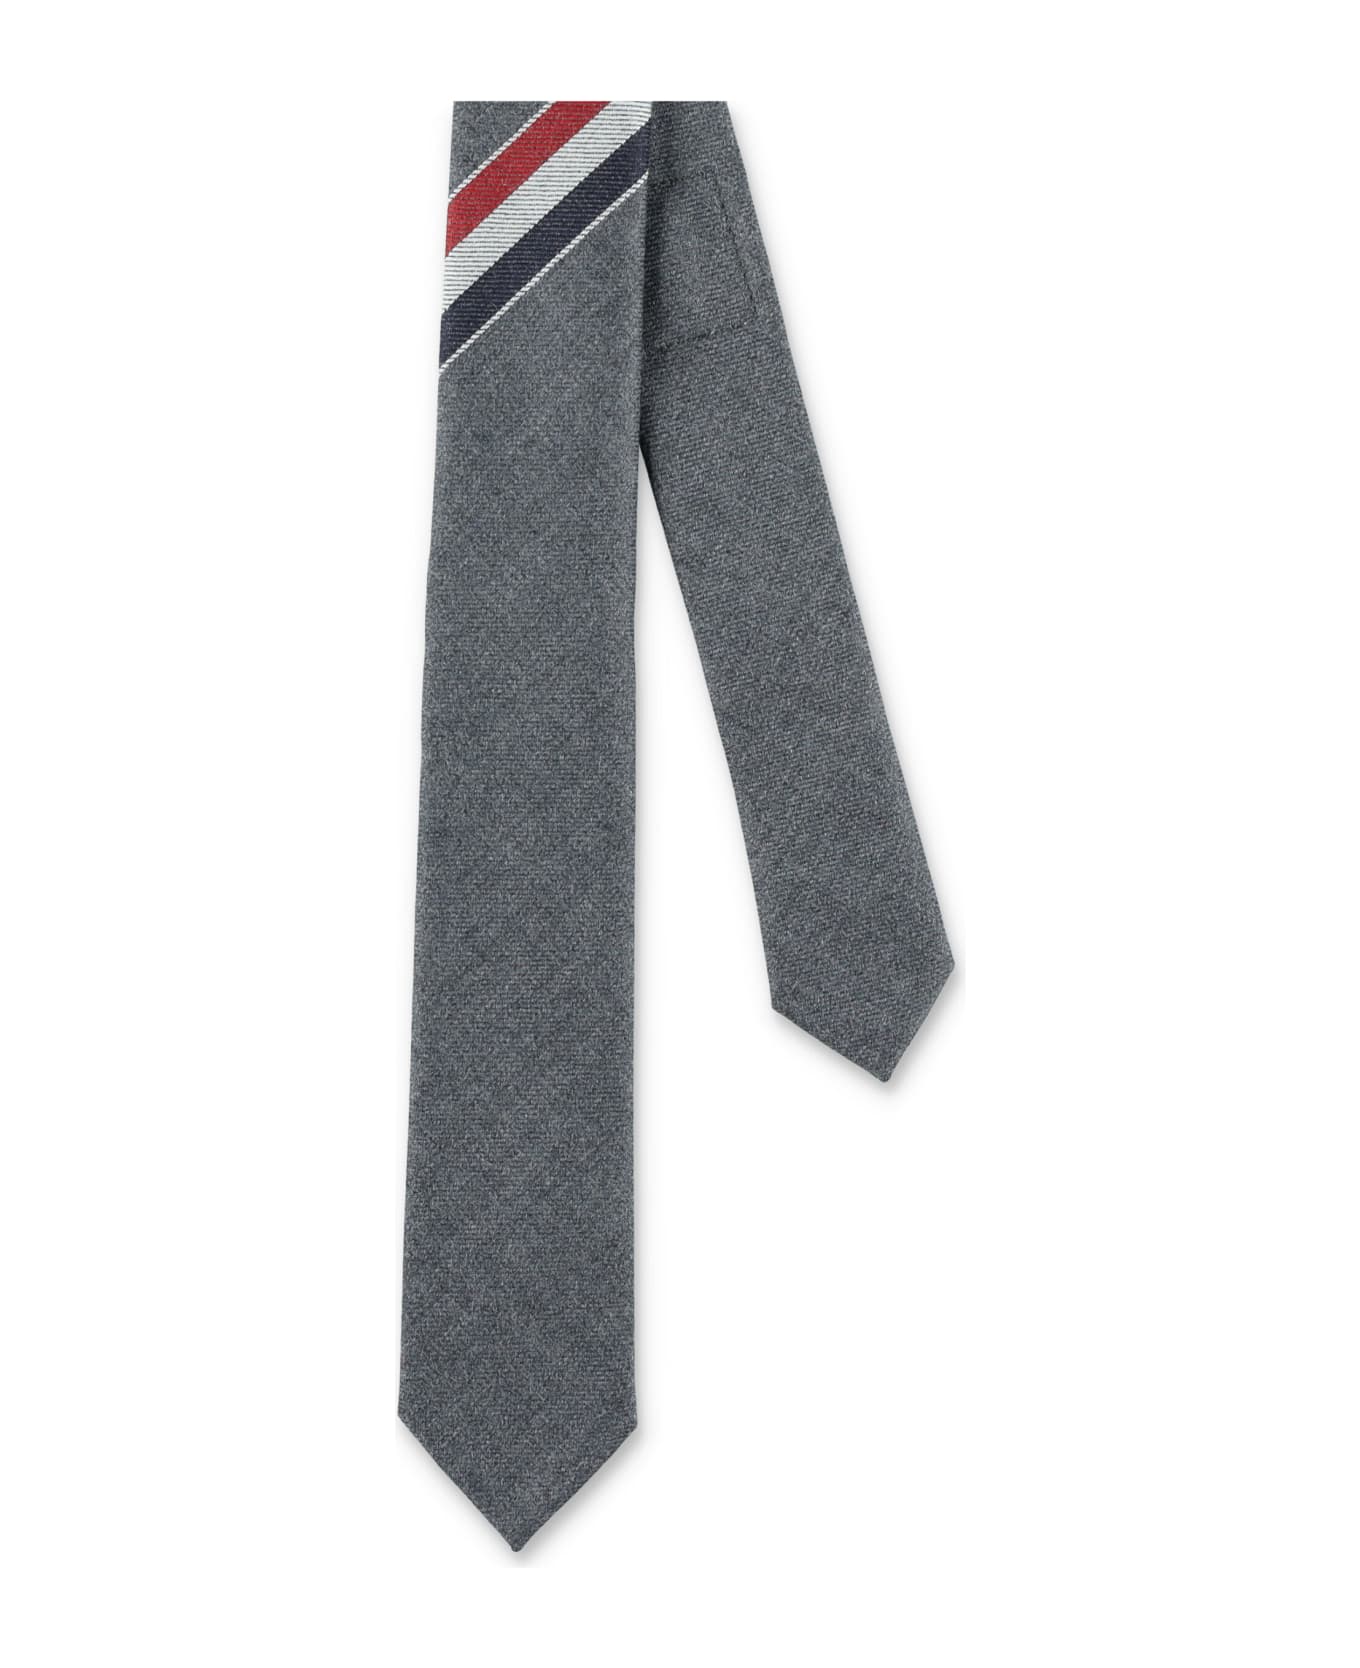 Thom Browne Rwb Motif Tie - Grey